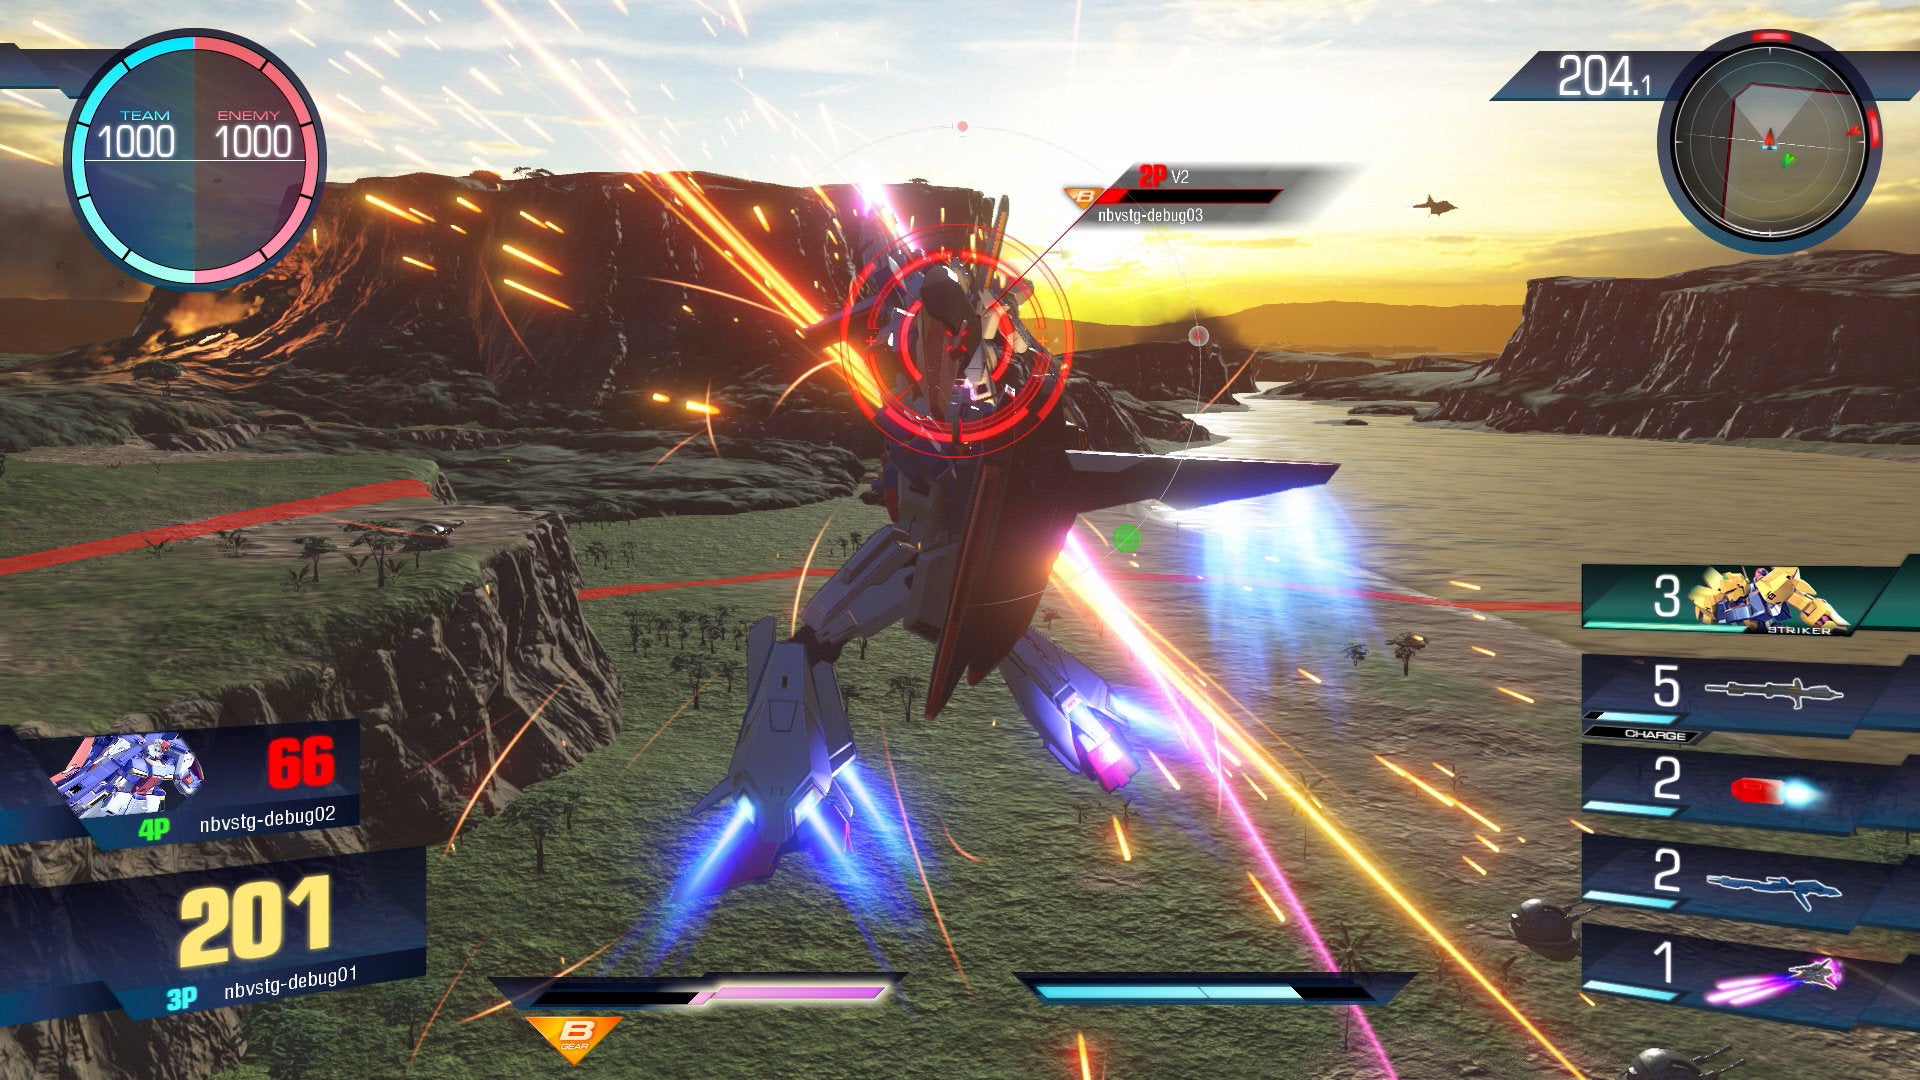 Screenshot from Gundam Versus video game battle scene.